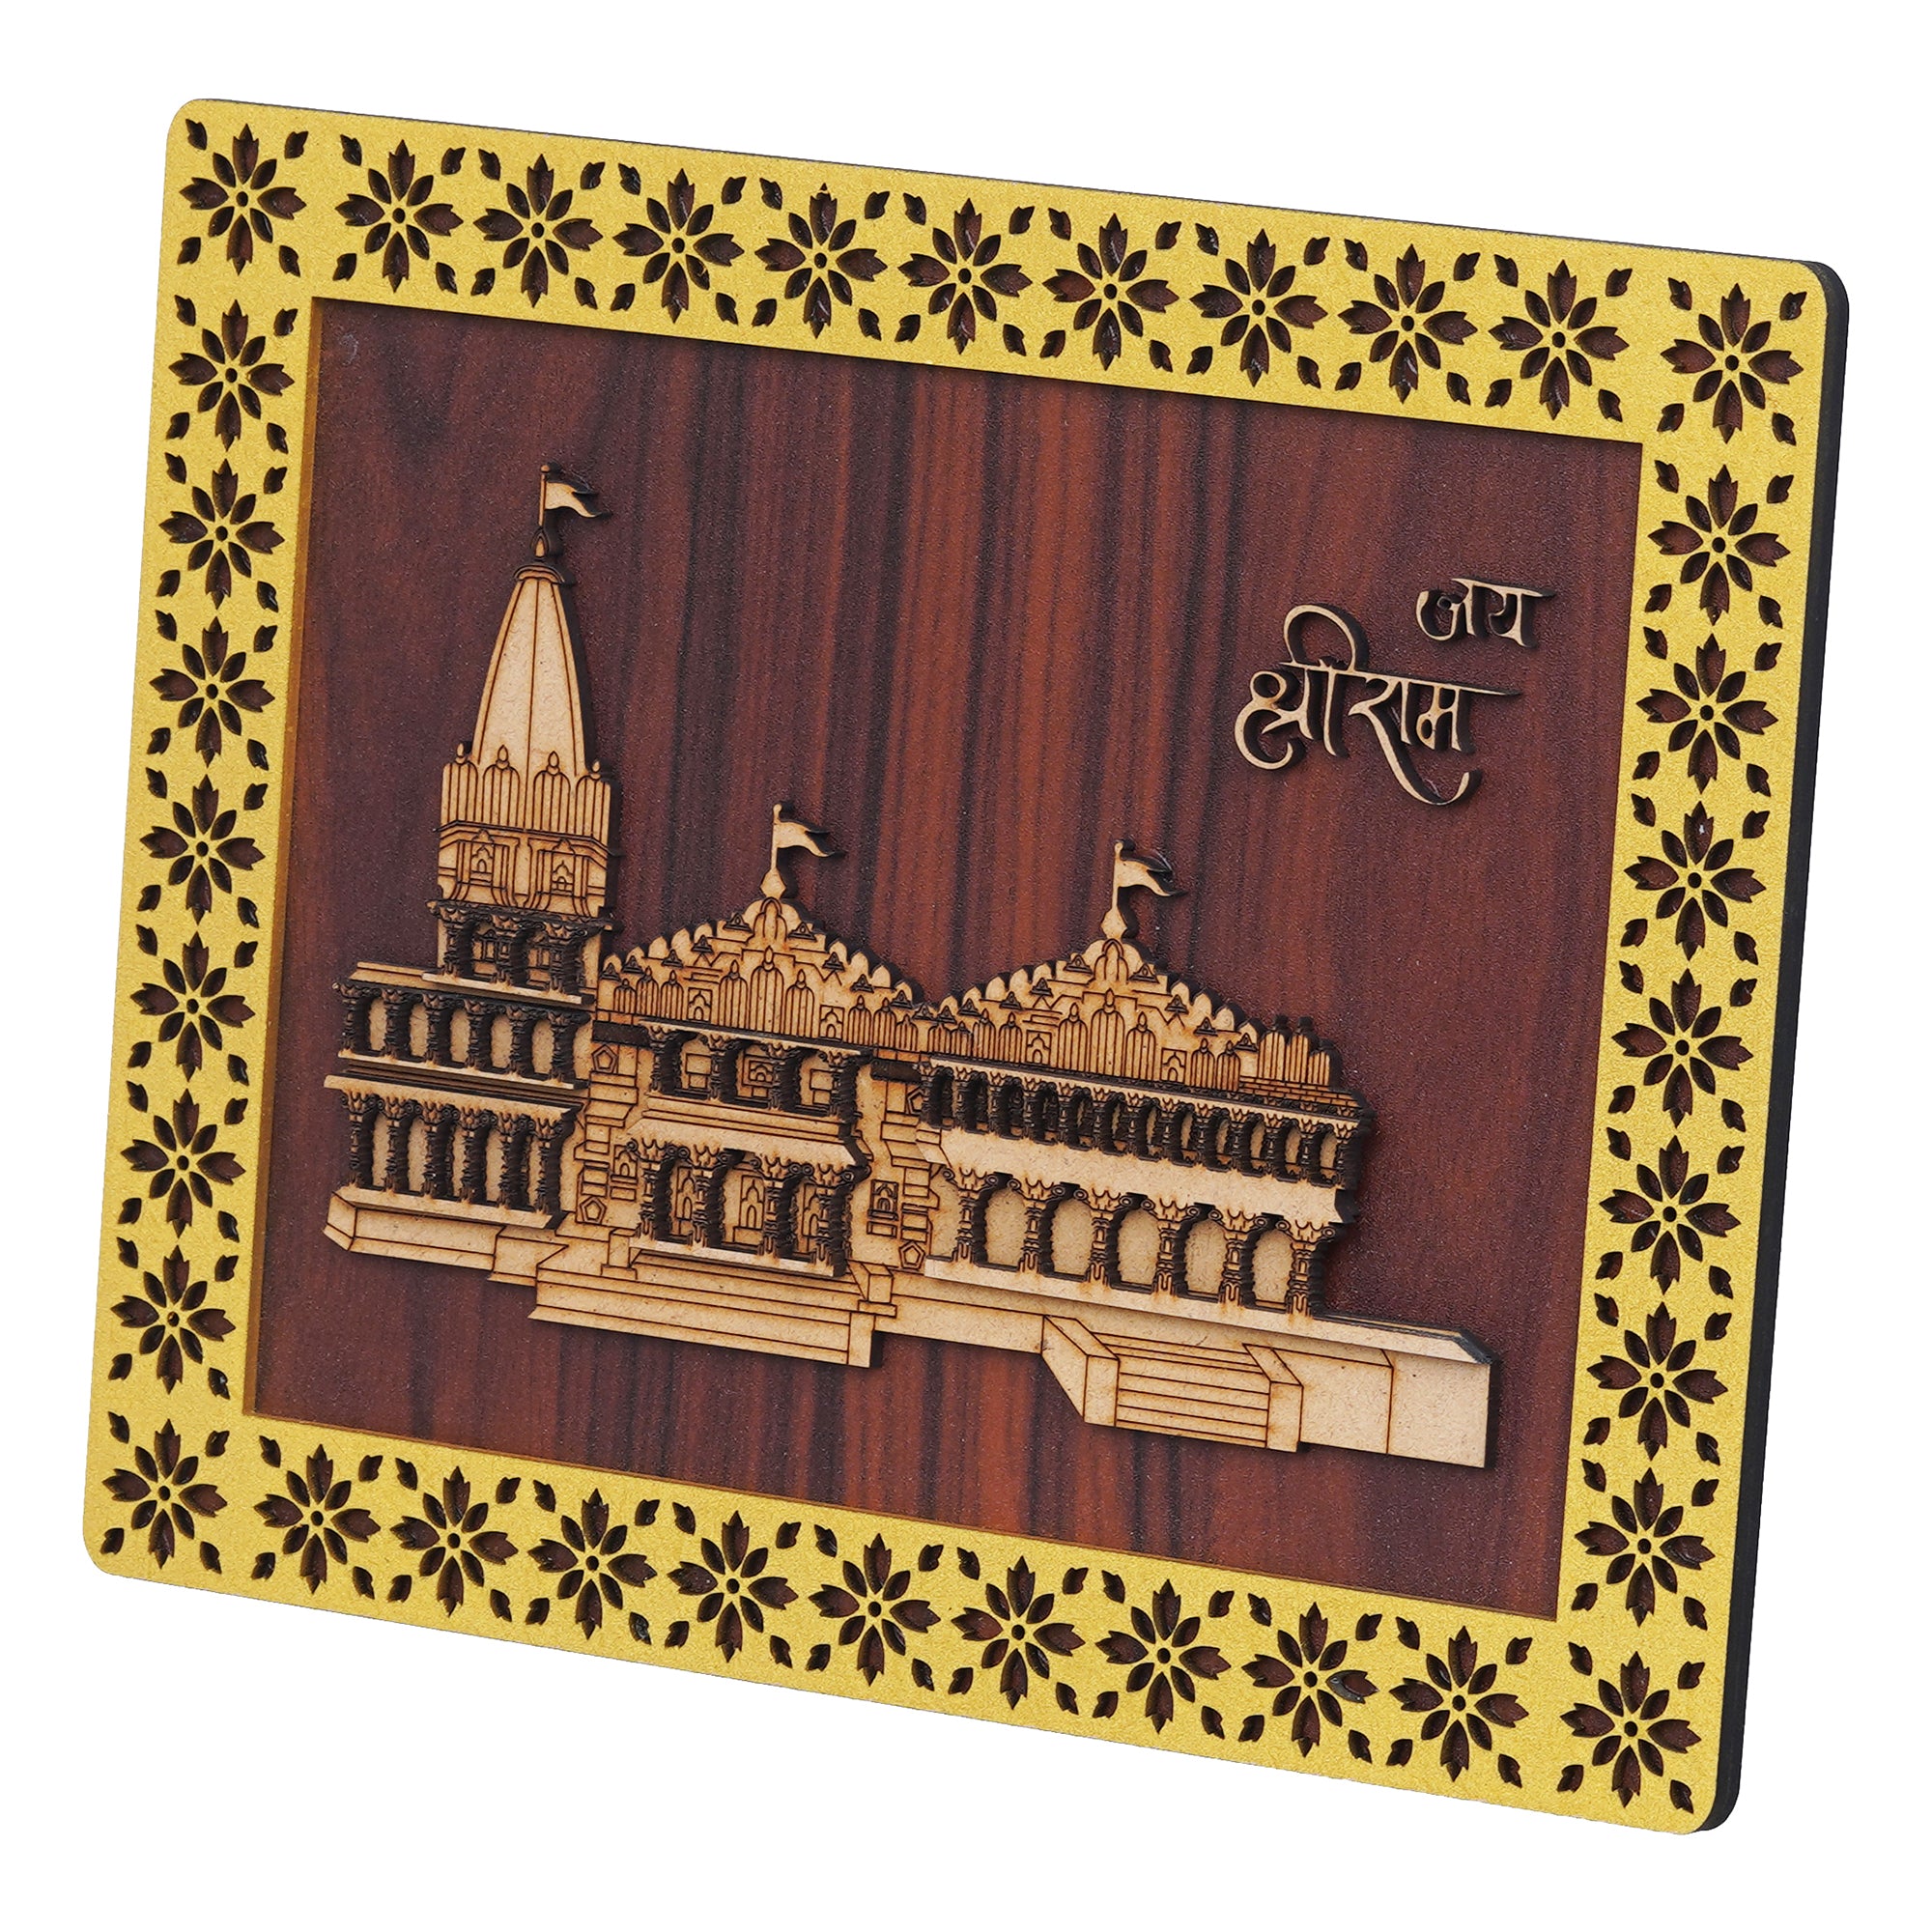 eCraftIndia Jai Shri Ram Mandir Ayodhya Decorative Wooden Frame - Religious Wall Hanging Showpiece for Home Decor, and Spiritual Gifting (Gold, Beige) 7